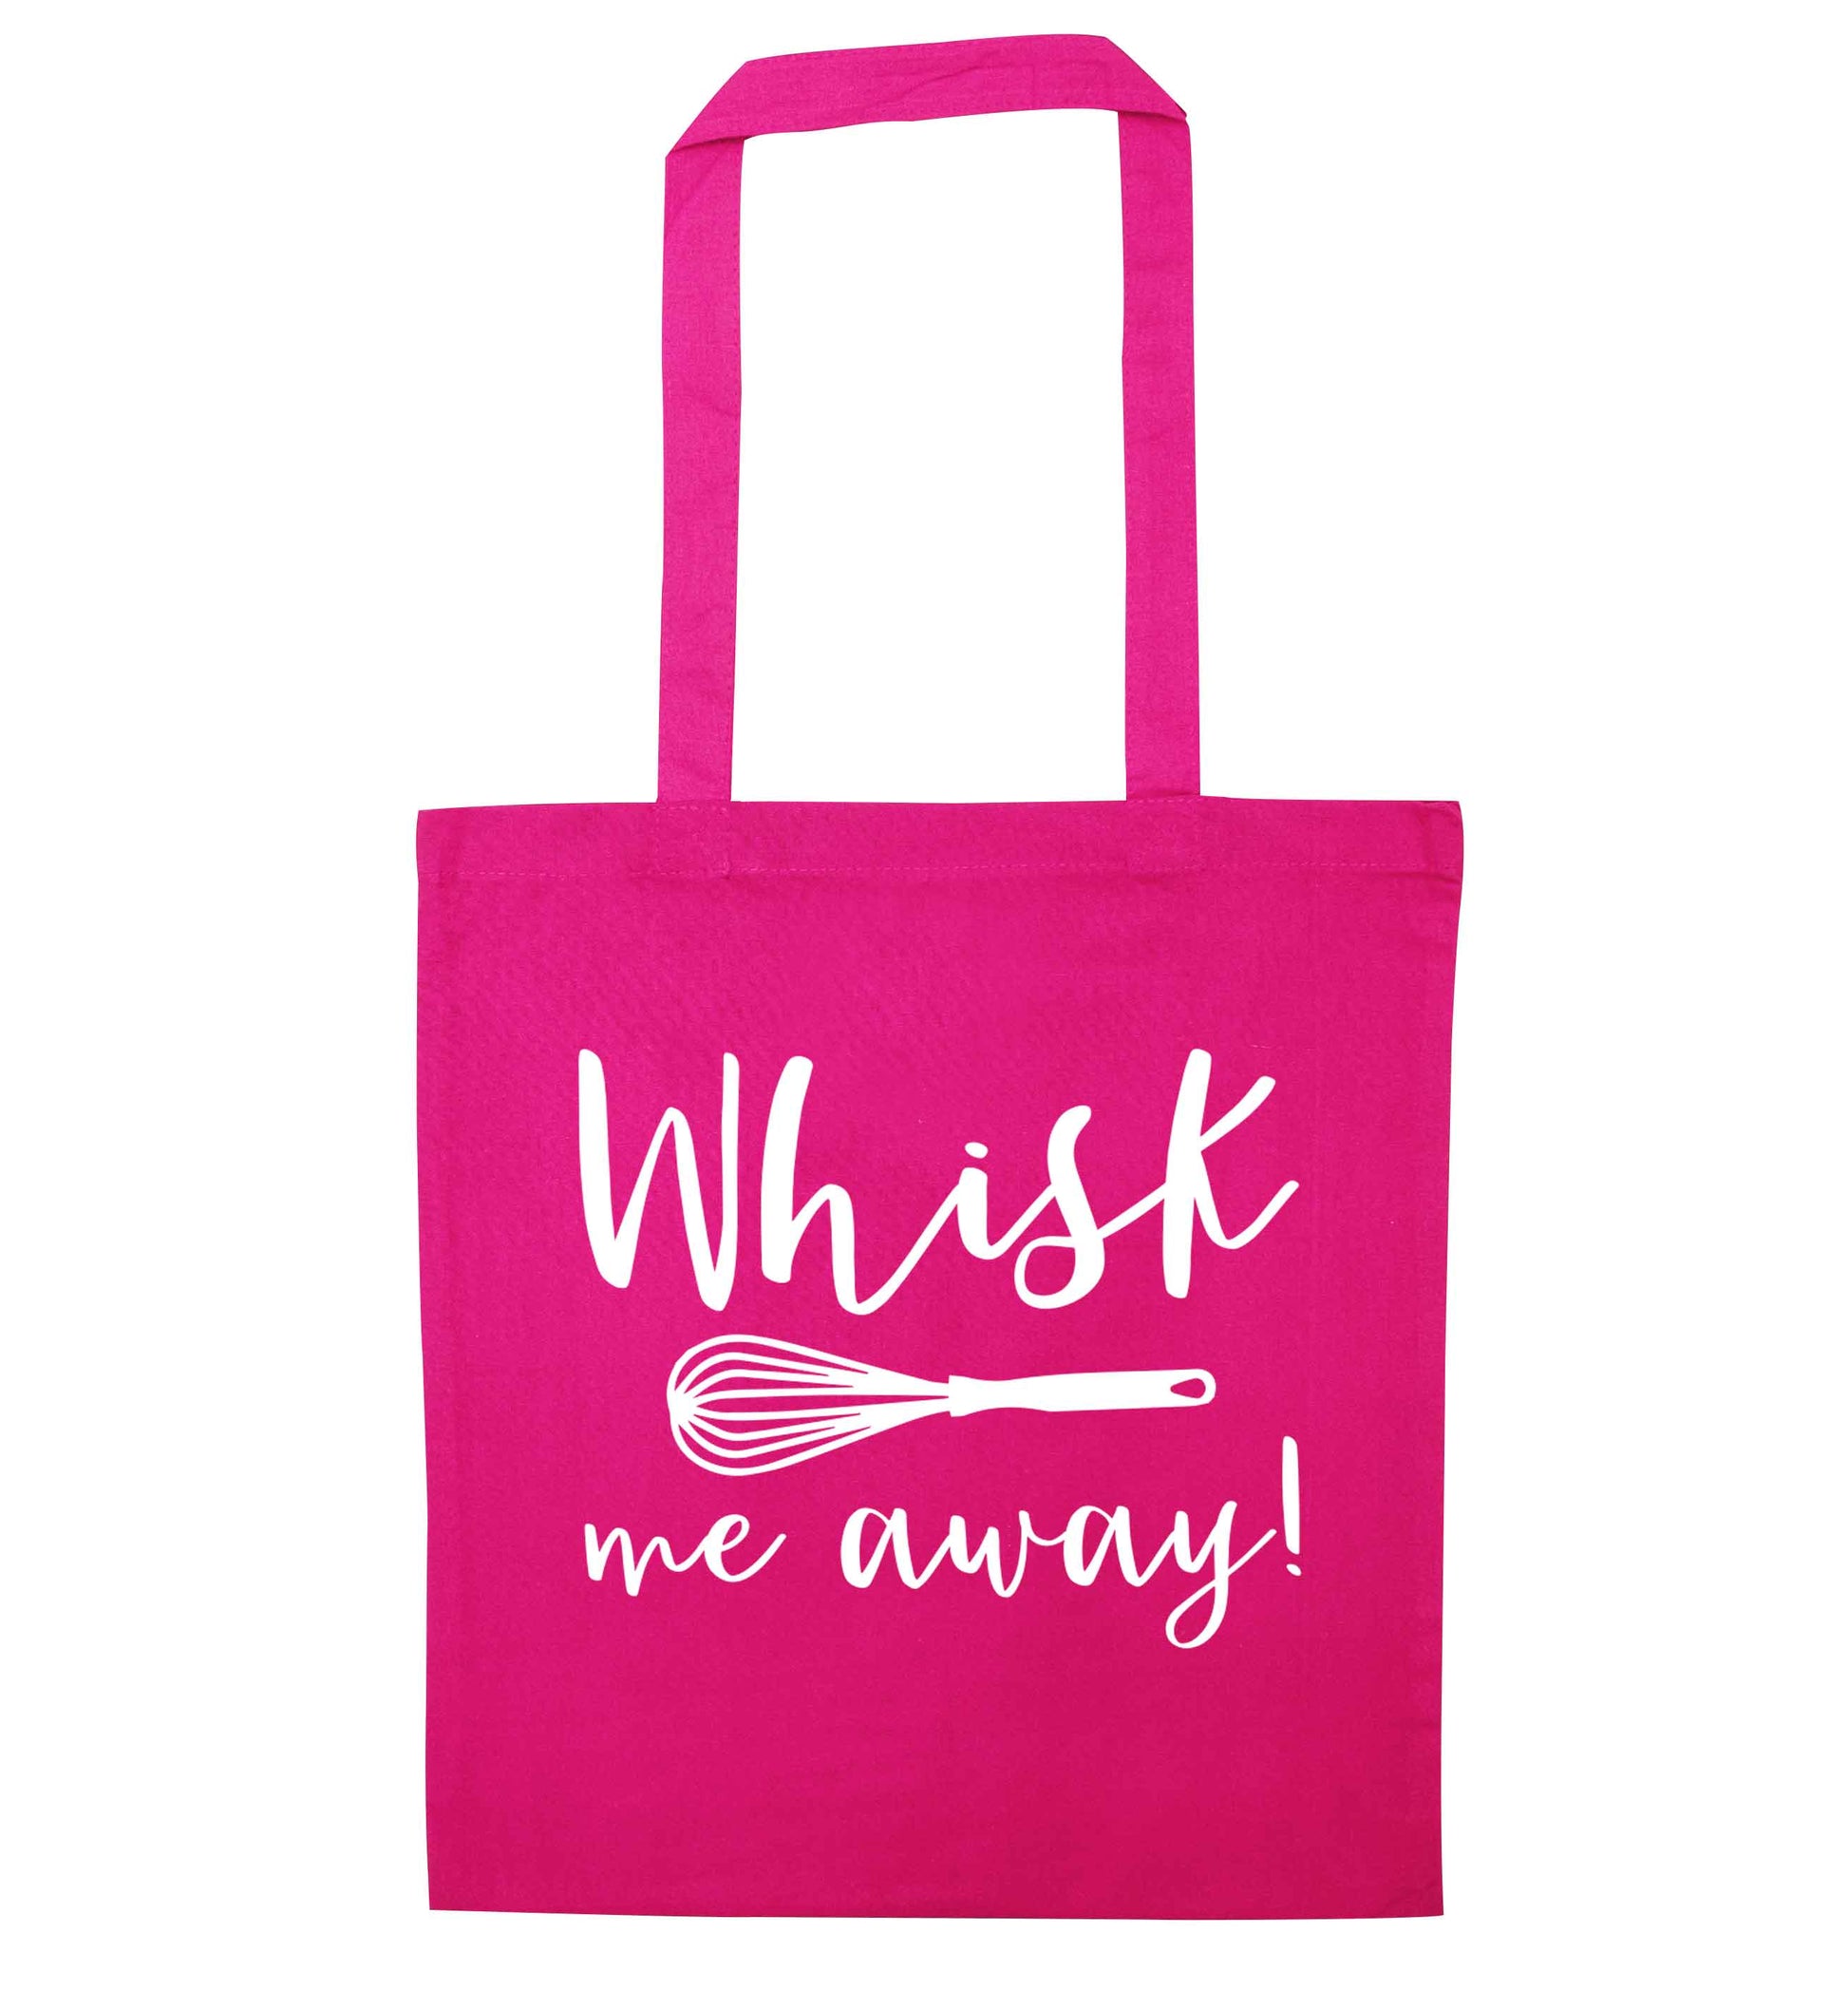 Whisk me away pink tote bag